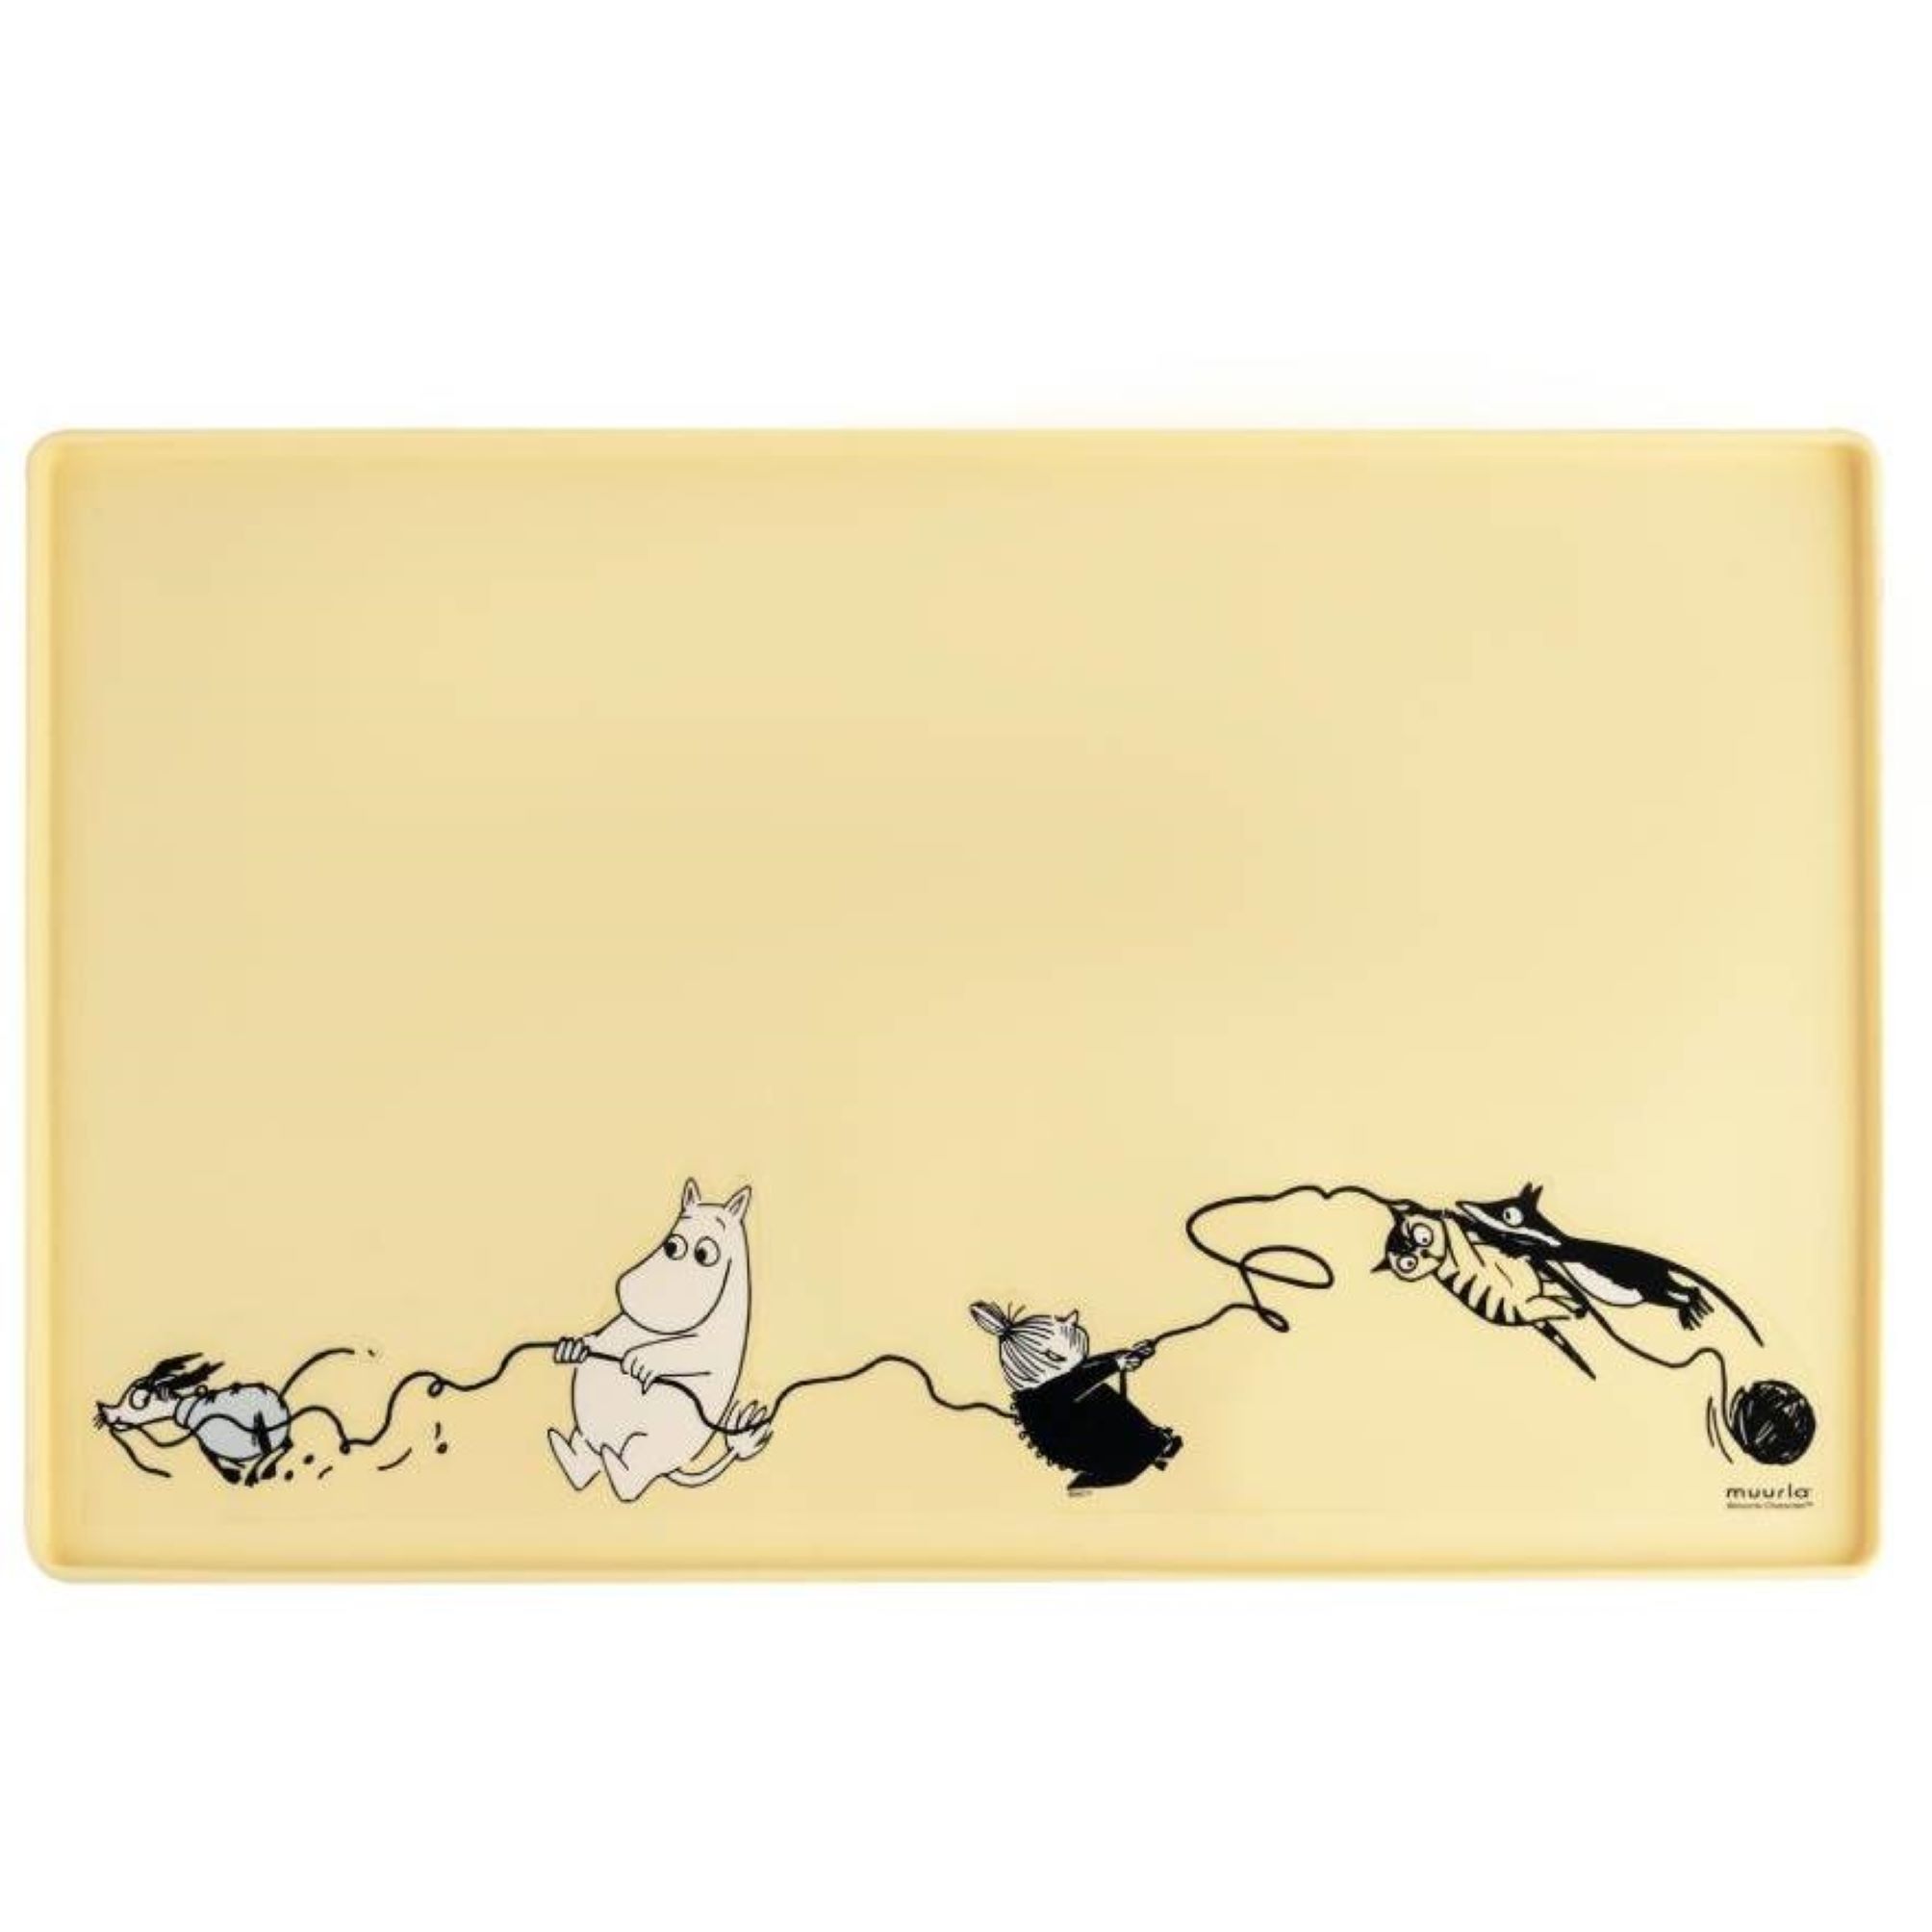 Muurla Moomin For Pets Yellow Place Mat 48cm x 30cm